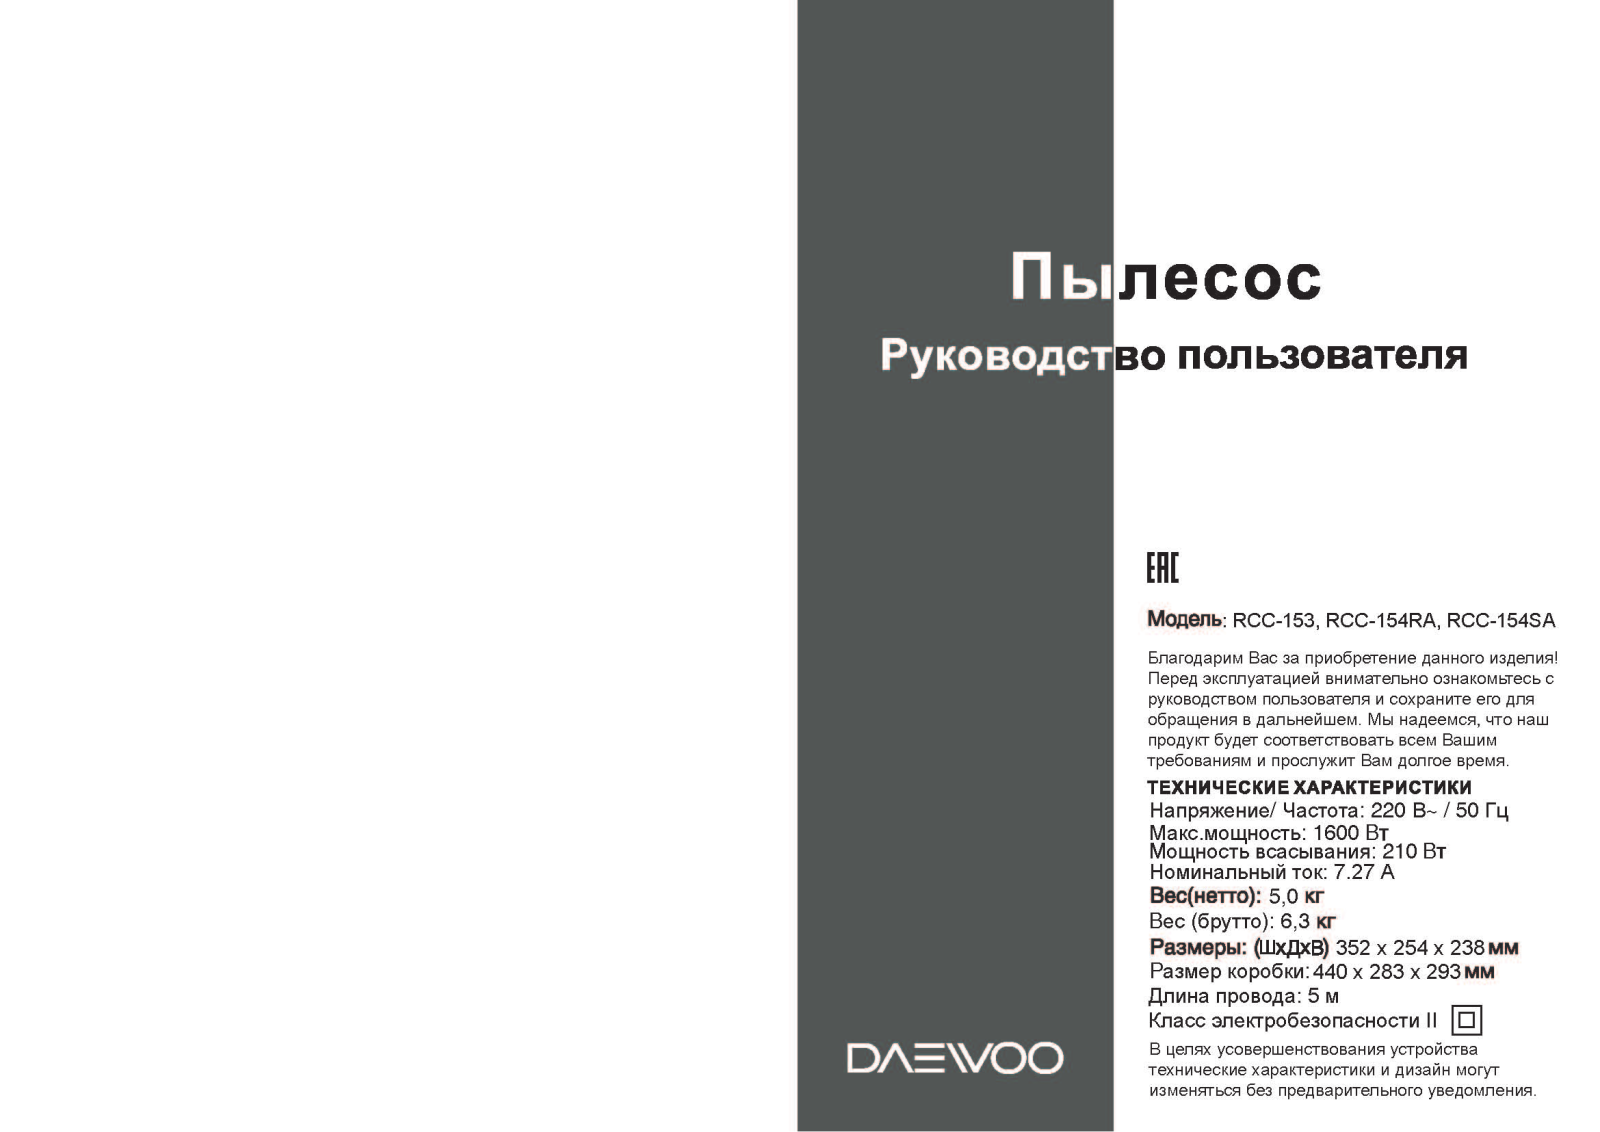 Daewoo RCC-154RA User Manual